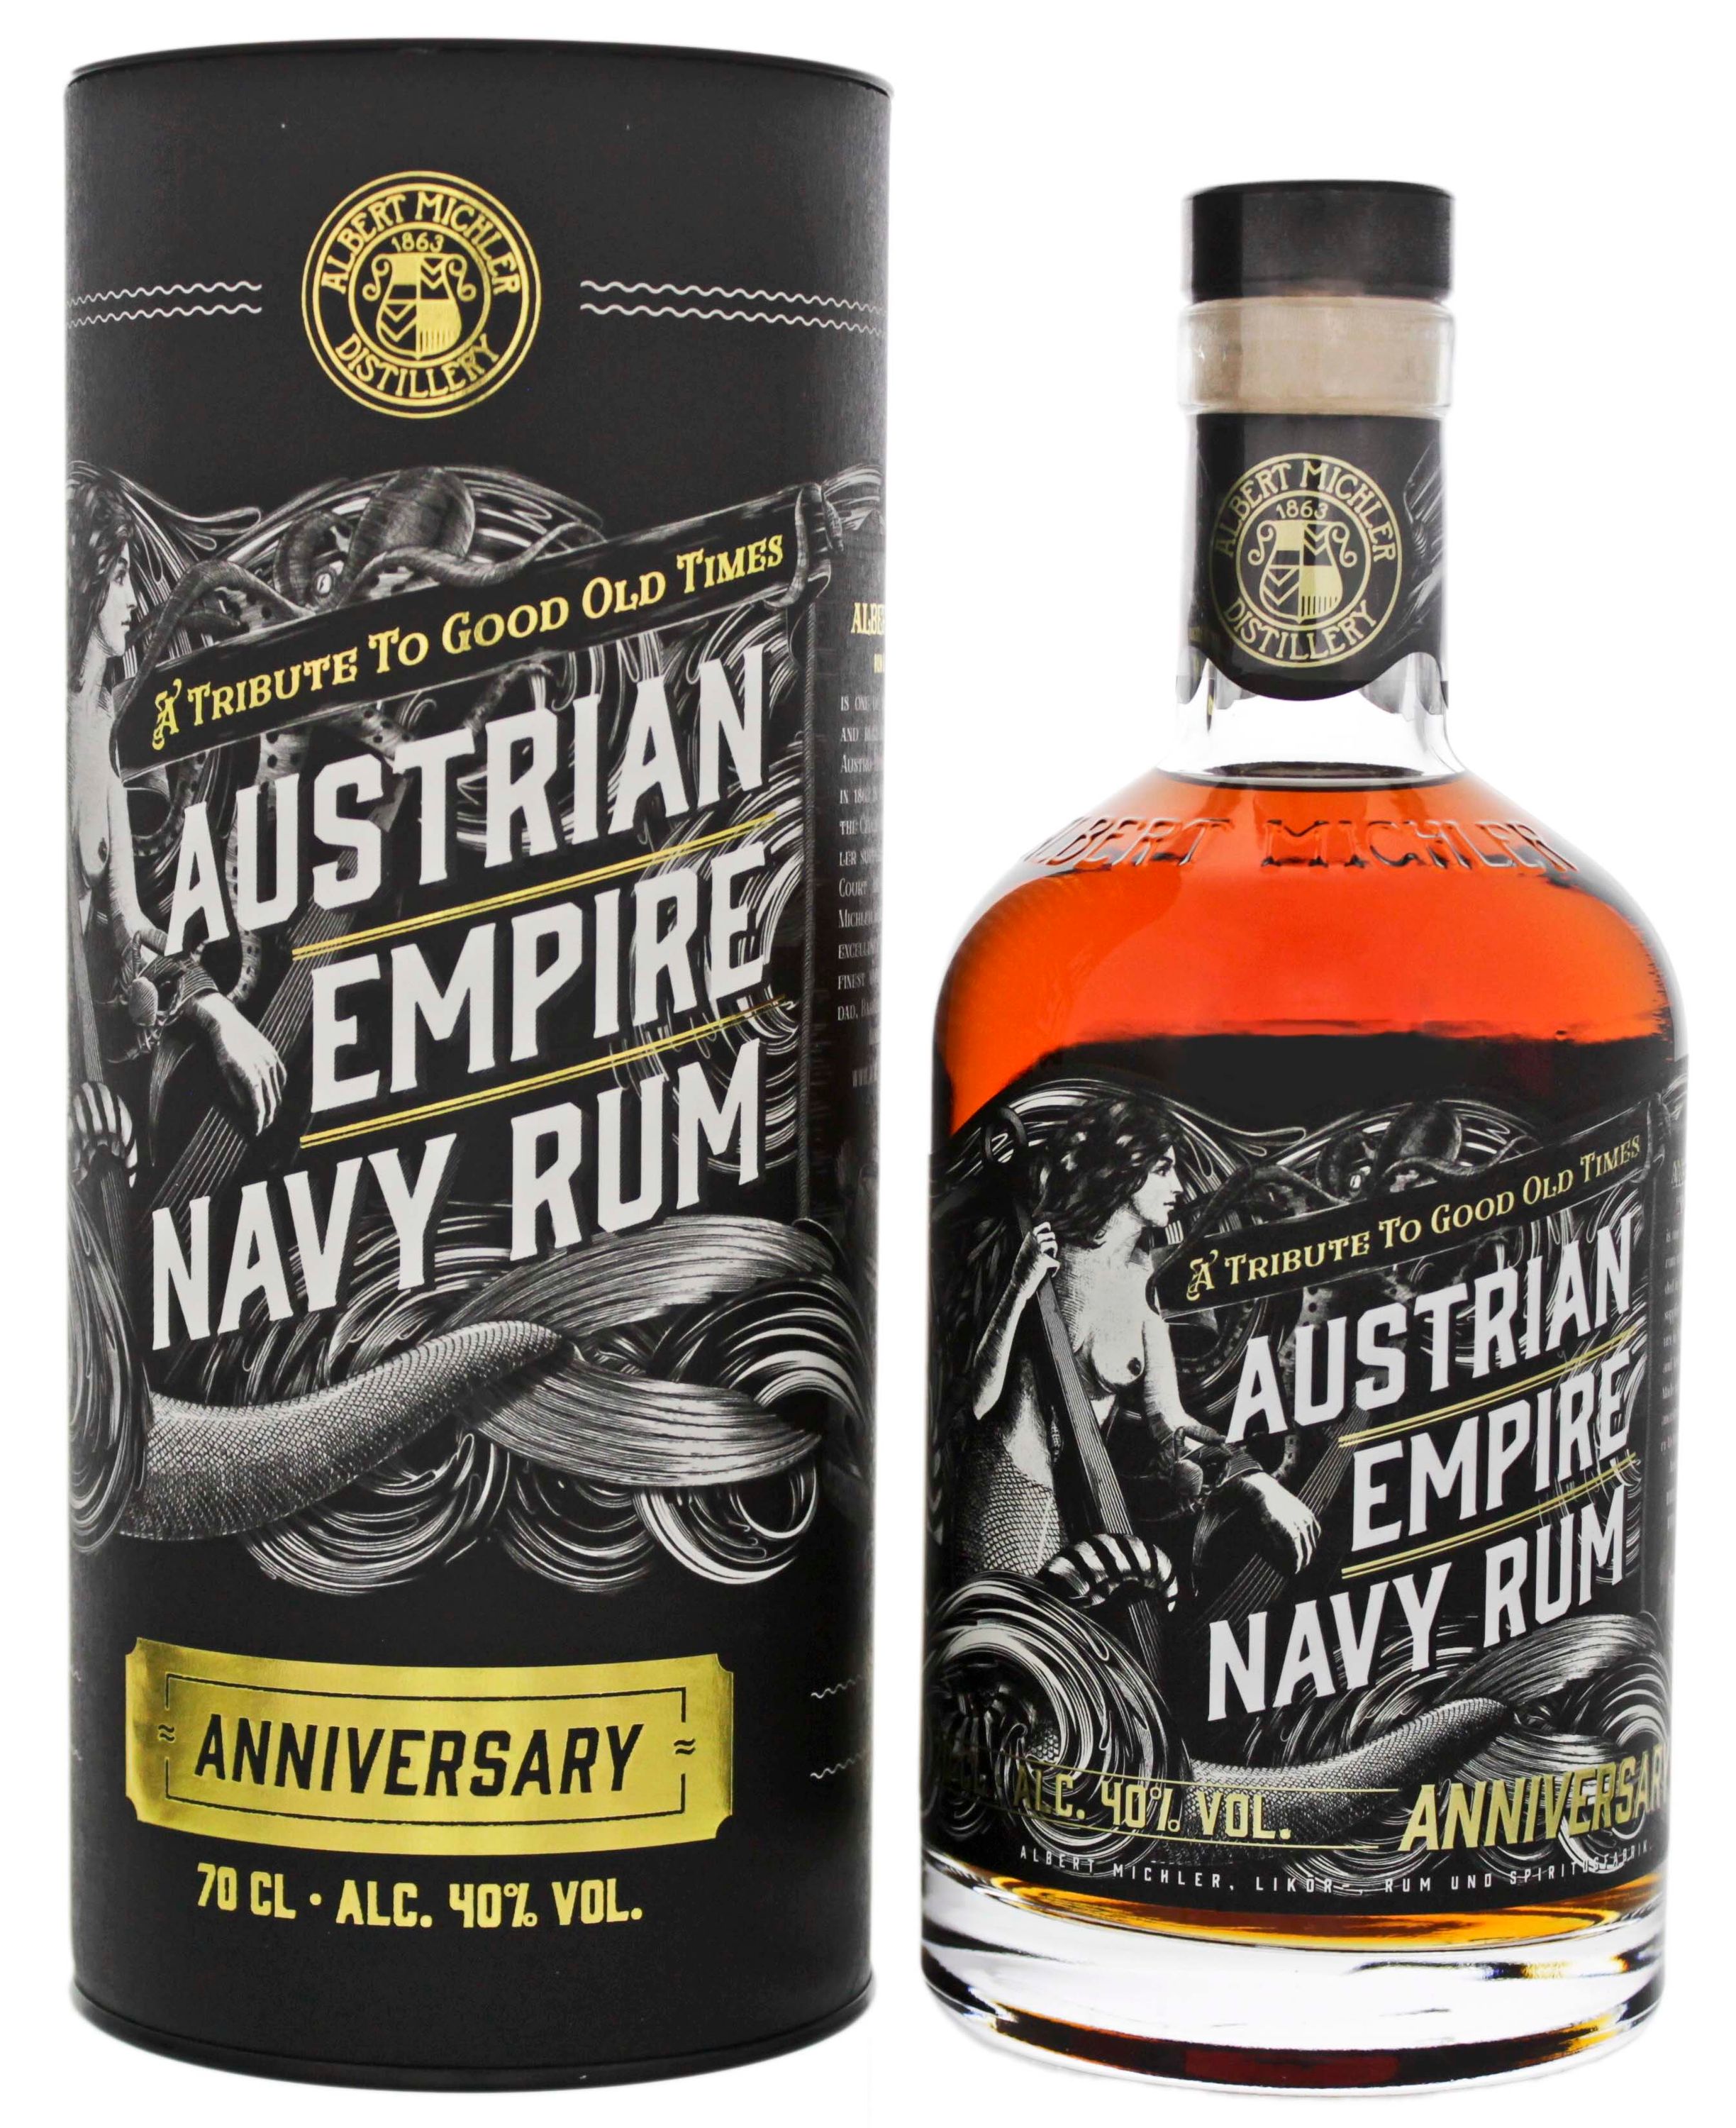 Austrian Empire Navy Rum Anniversary 0,7l, alc. 40 Vol.-%, Rum Barbados